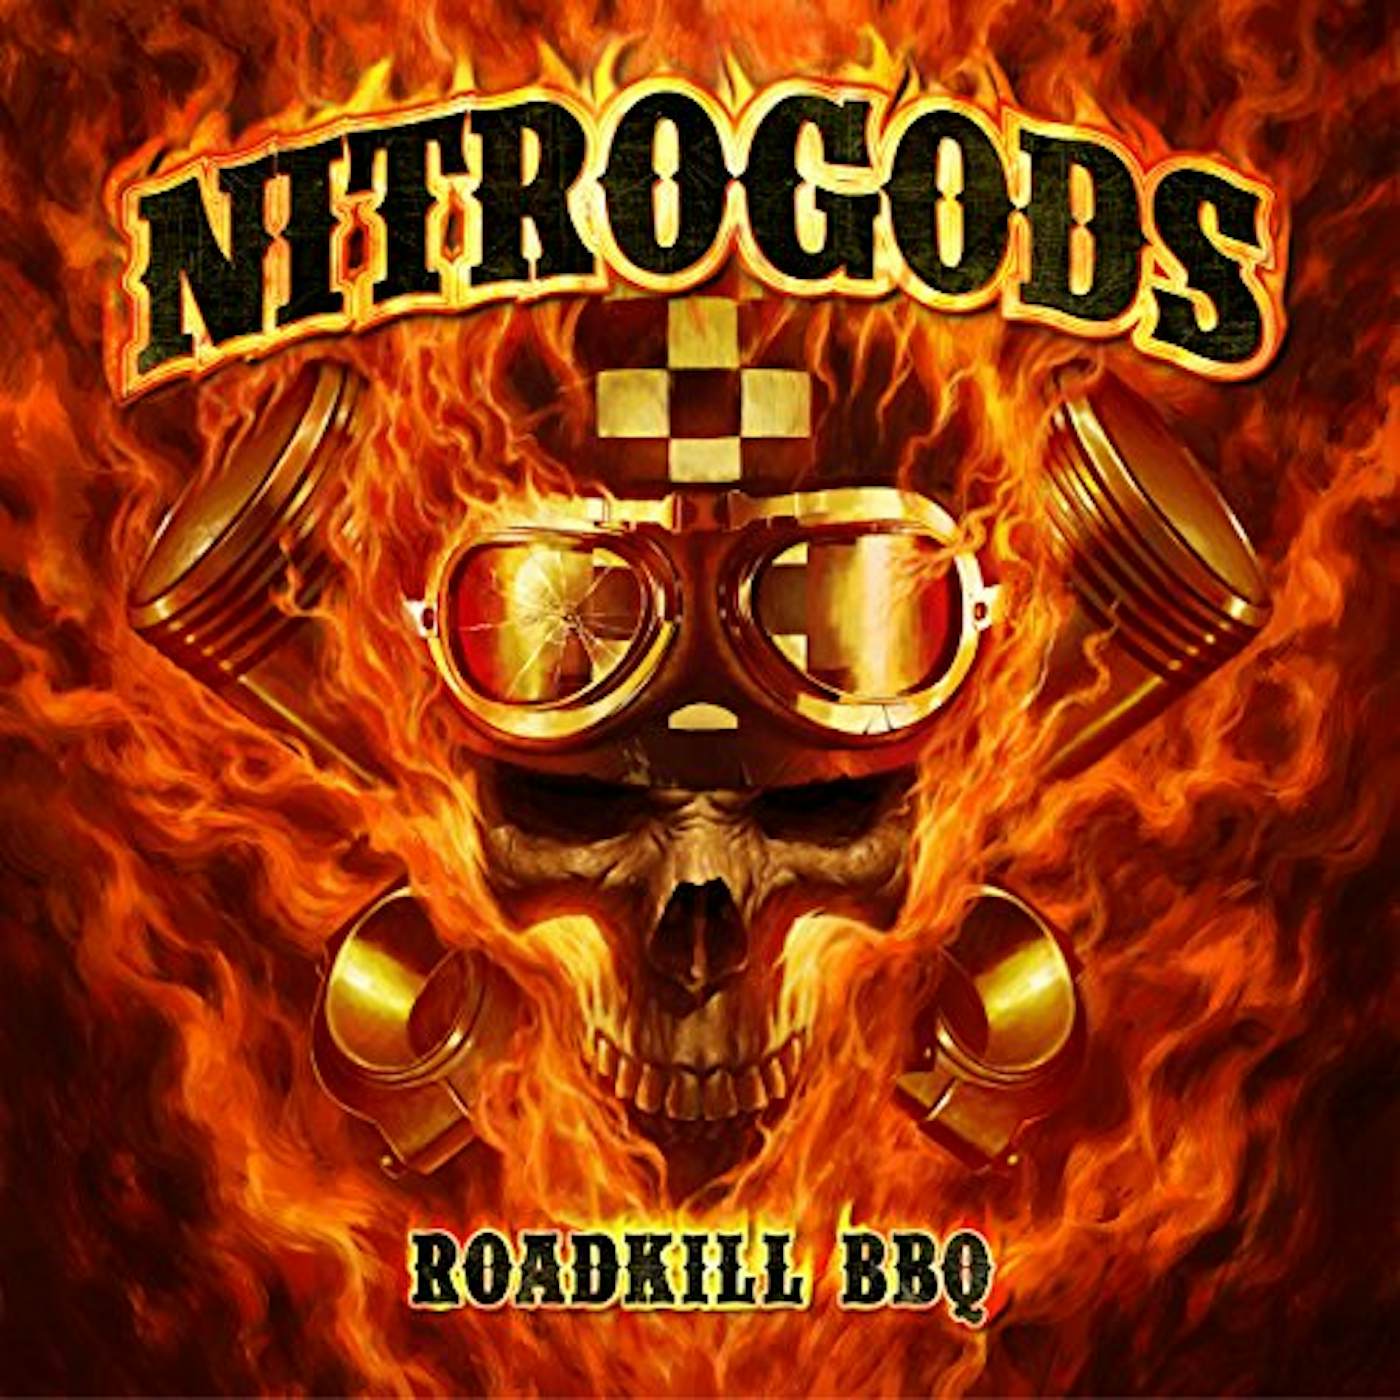 Nitrogods ROADKILL BBQ CD